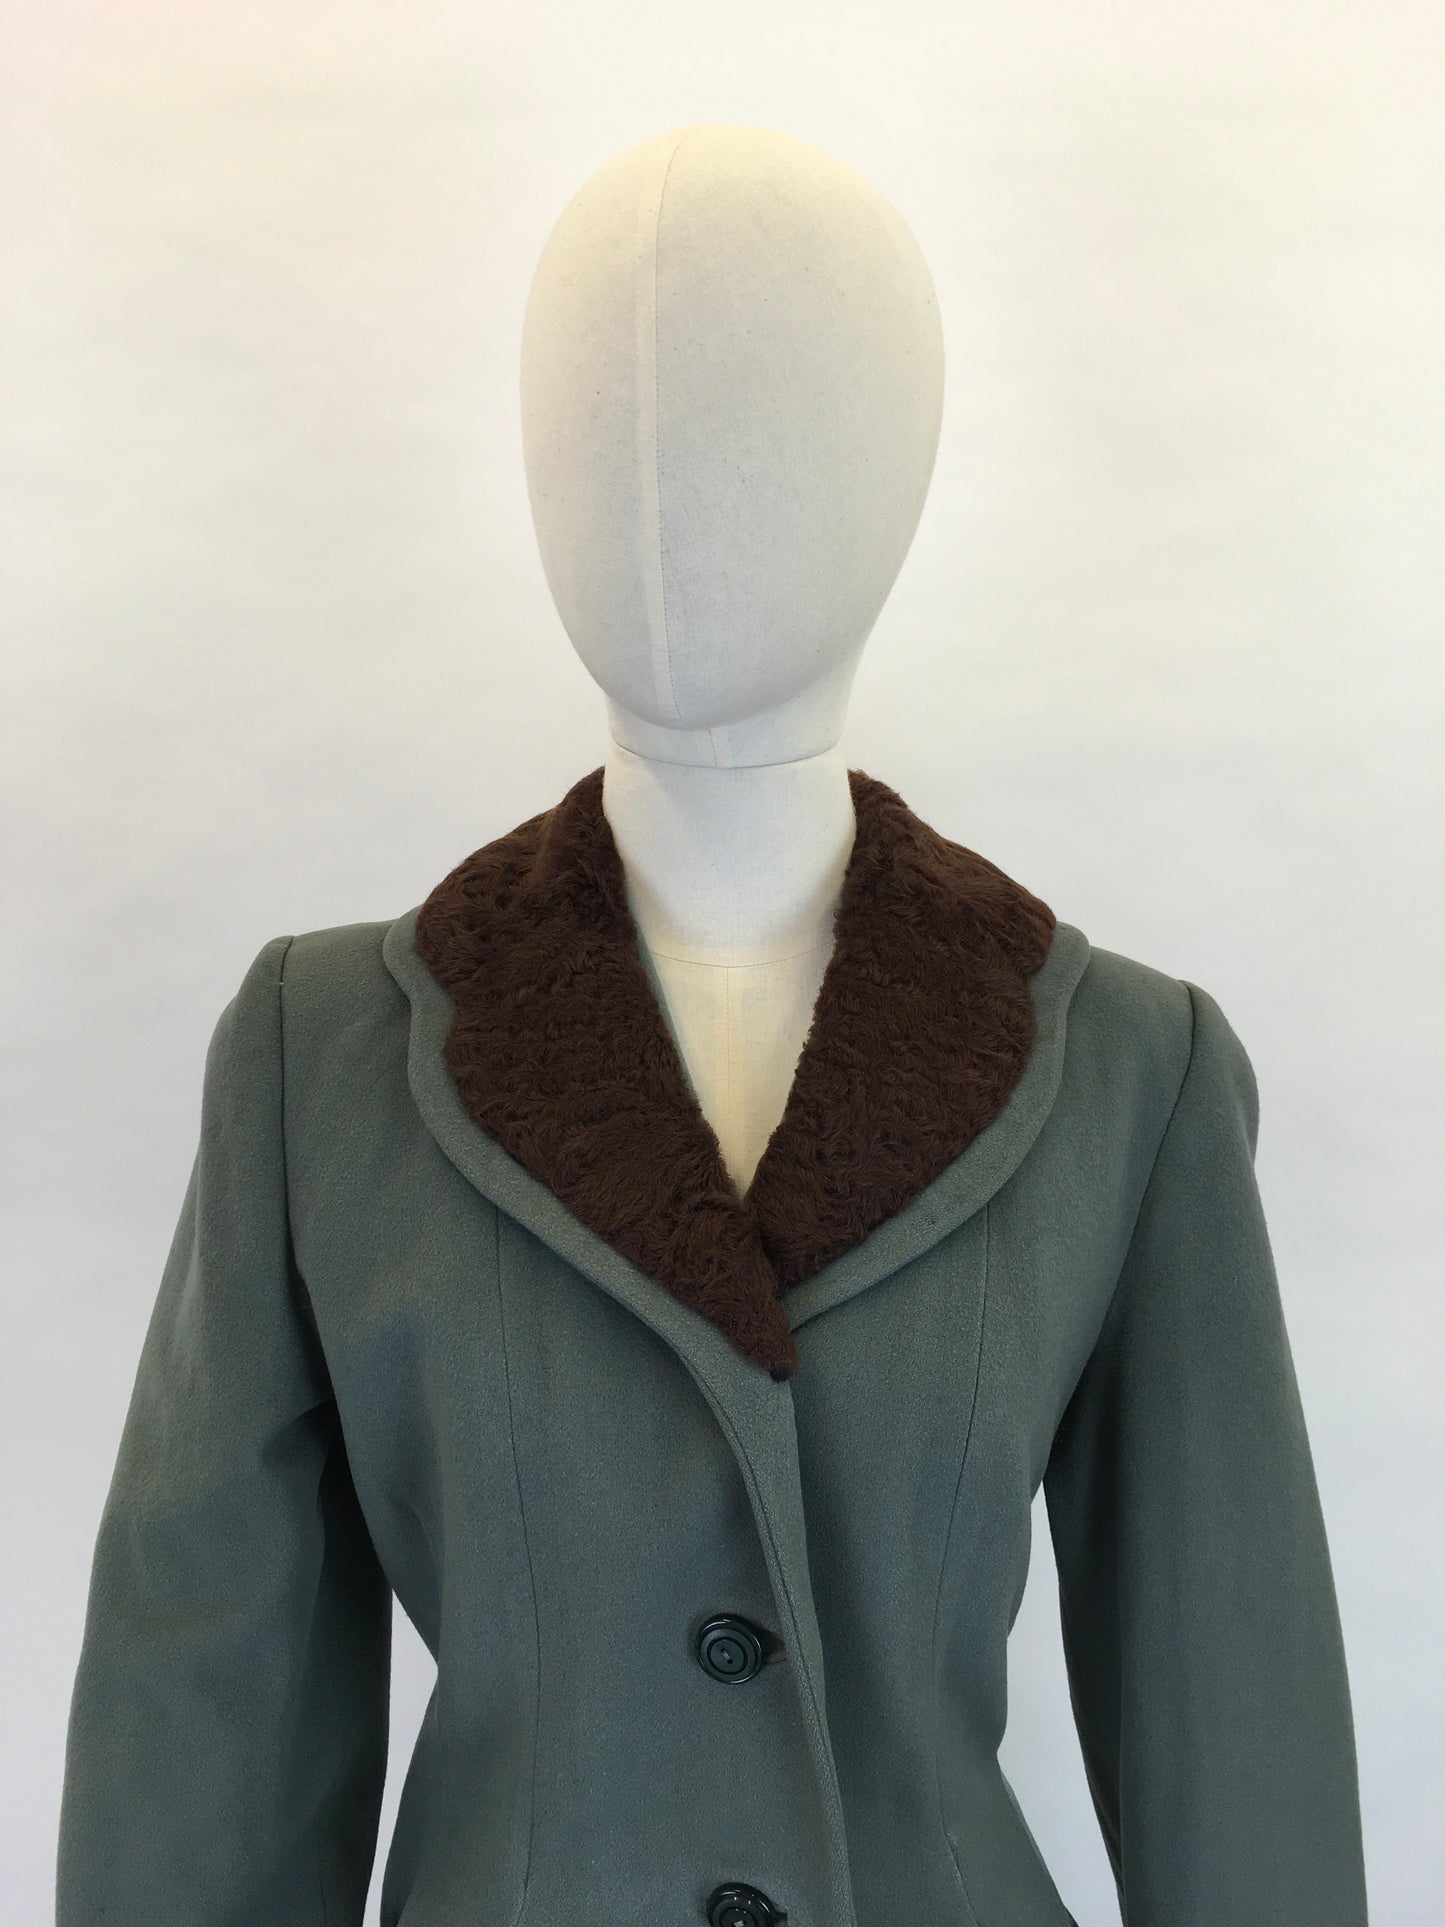 Original 1940s Duck Egg Wool Princess Coat with Fur Trim - Stunning 40’s Silhouette